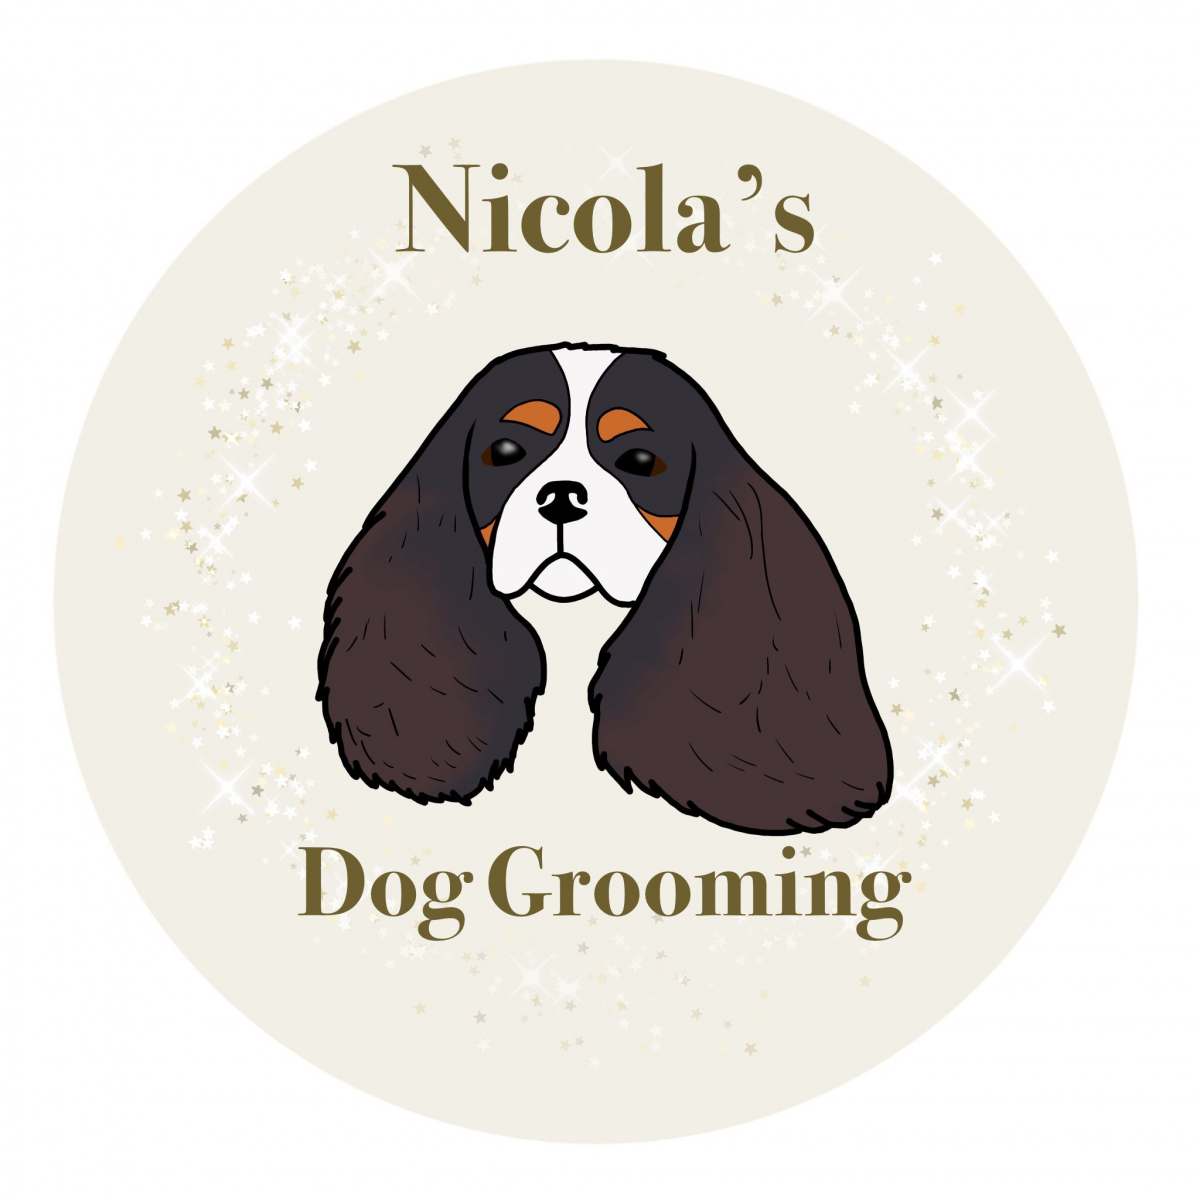 Dog groomers | Grantham | Nicola's Dog Grooming